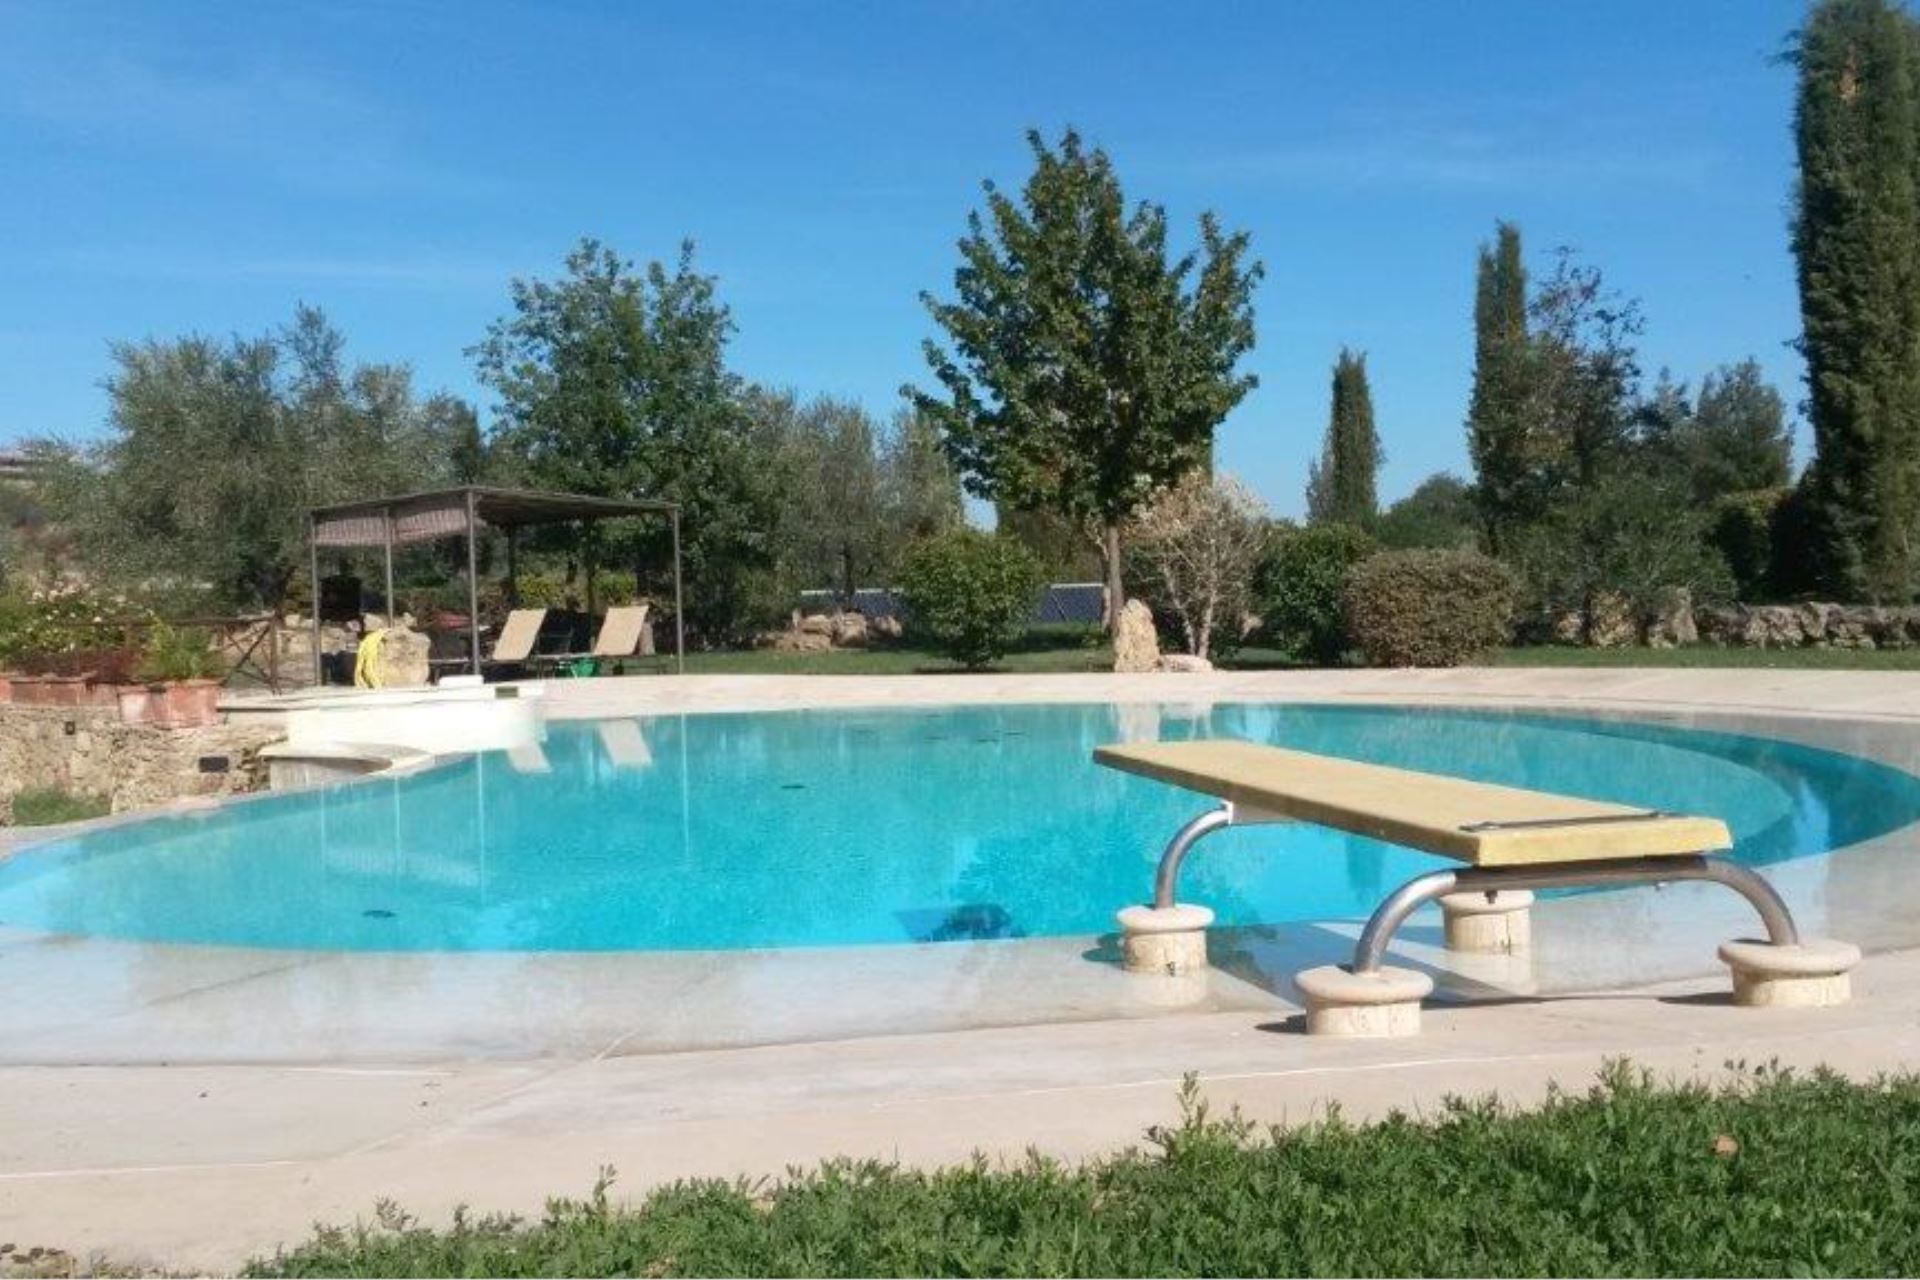 421_5bb7a6b_Agriturimso, vakantiehuis met privé zwembad, Toscane, Asciano, Val D'Orcia (16)